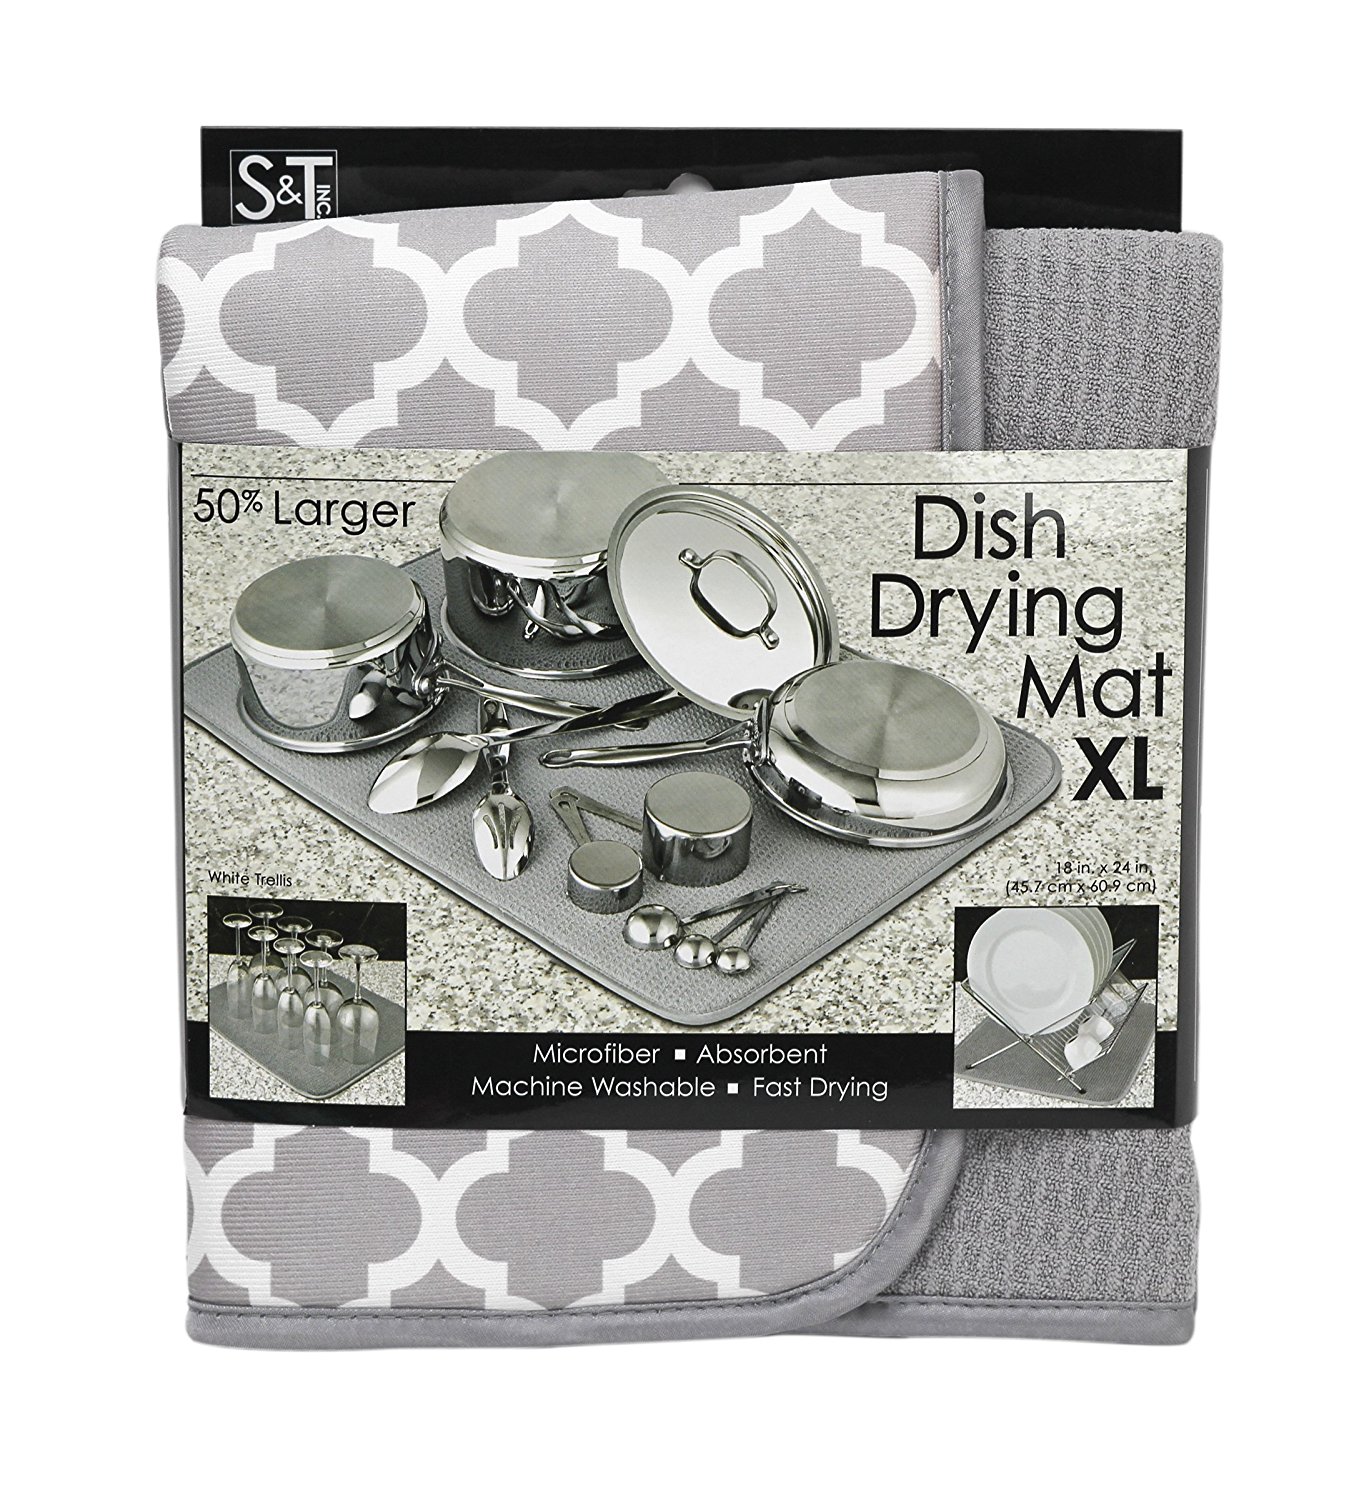 Dish Drying Mat – X-Large – Just $5.89!